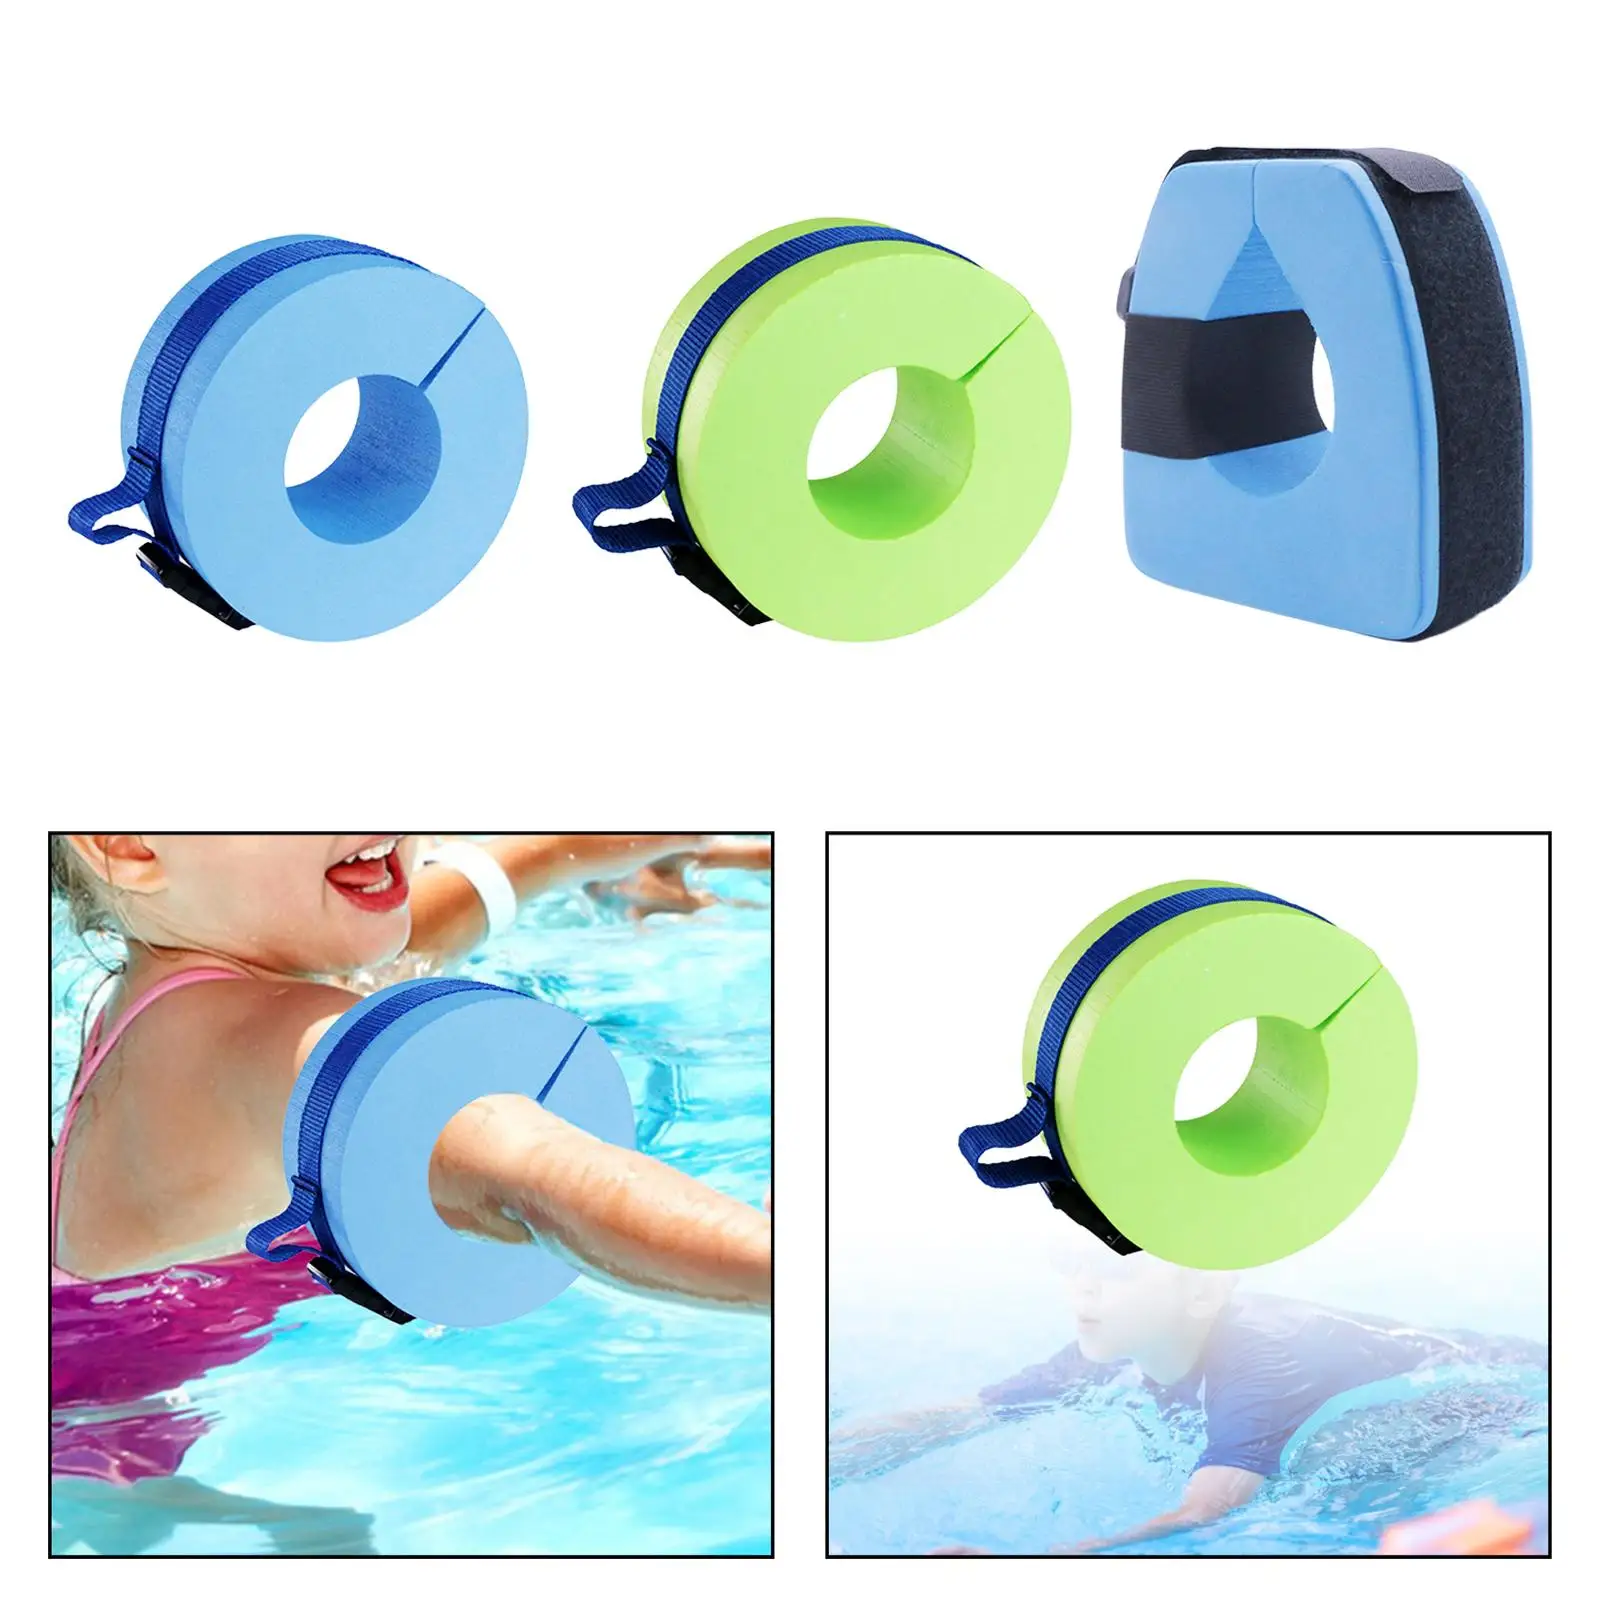 EVA Foam Swim Aquatic Cuffs with Quick Release Buckle Swimming Arm Bands